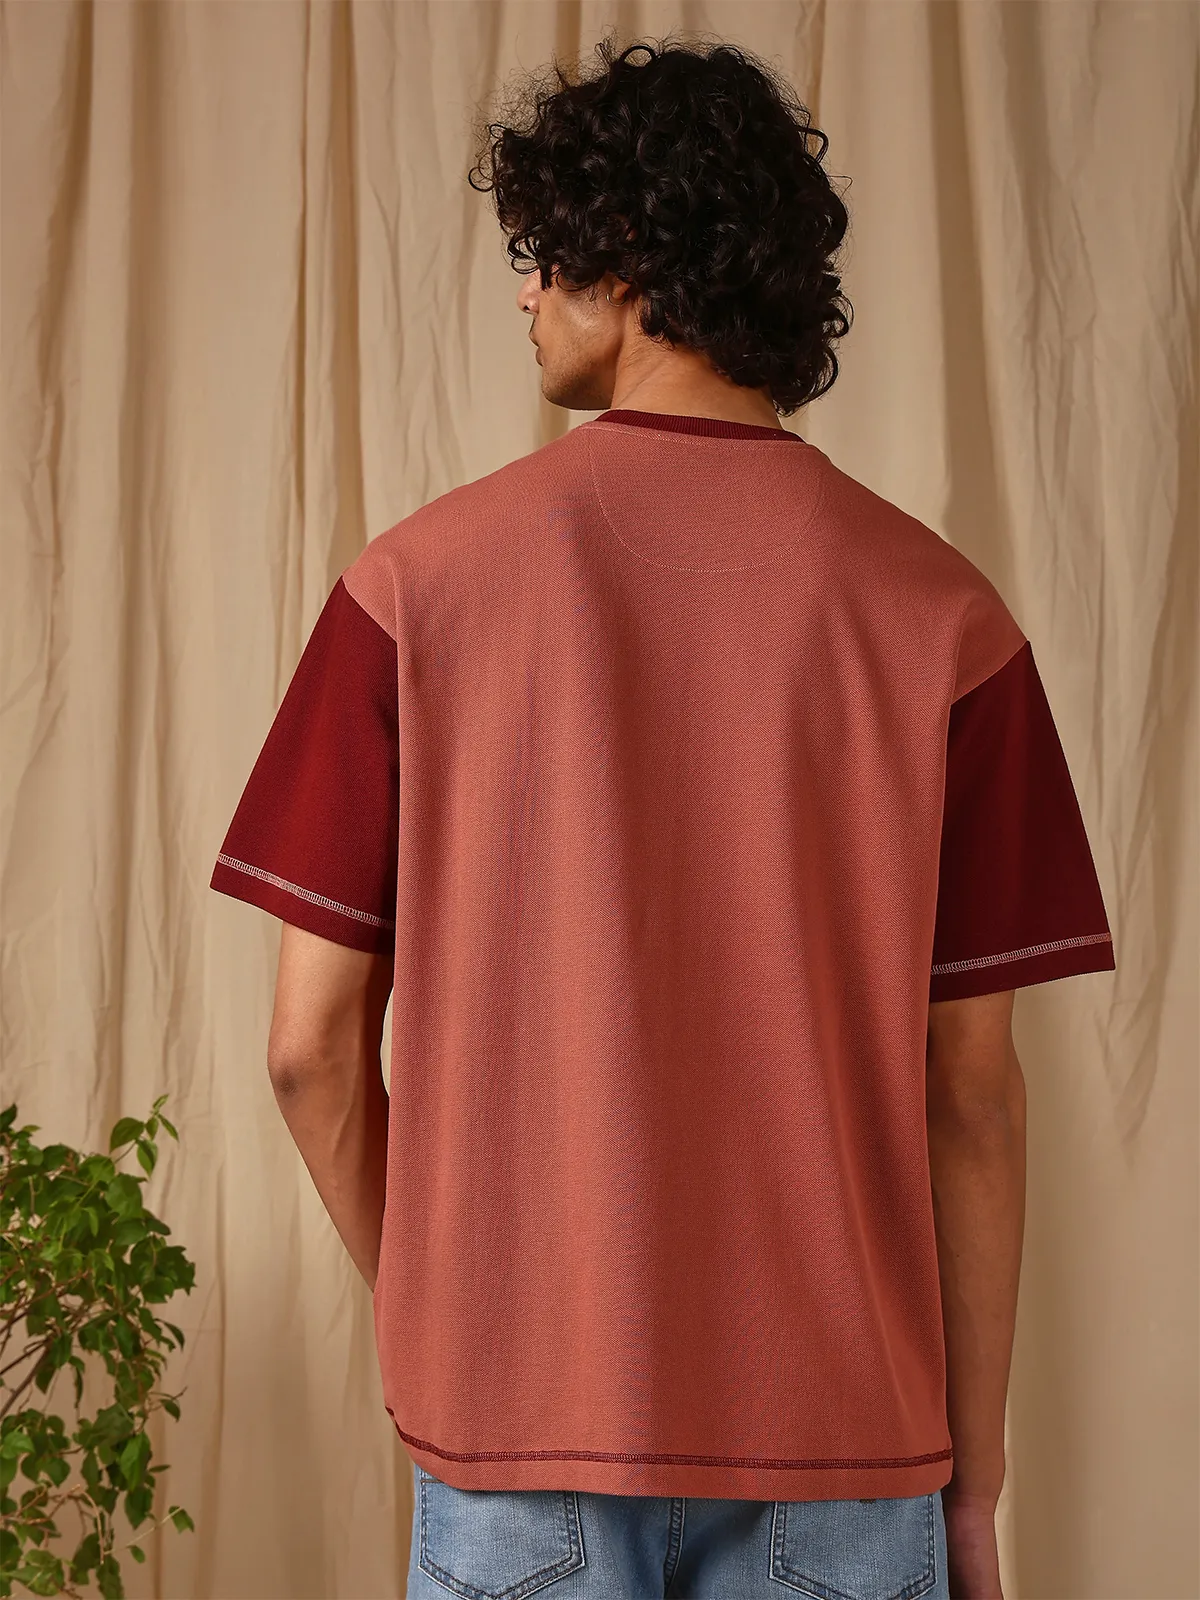 MUFTI plain brown cotton t-shirt